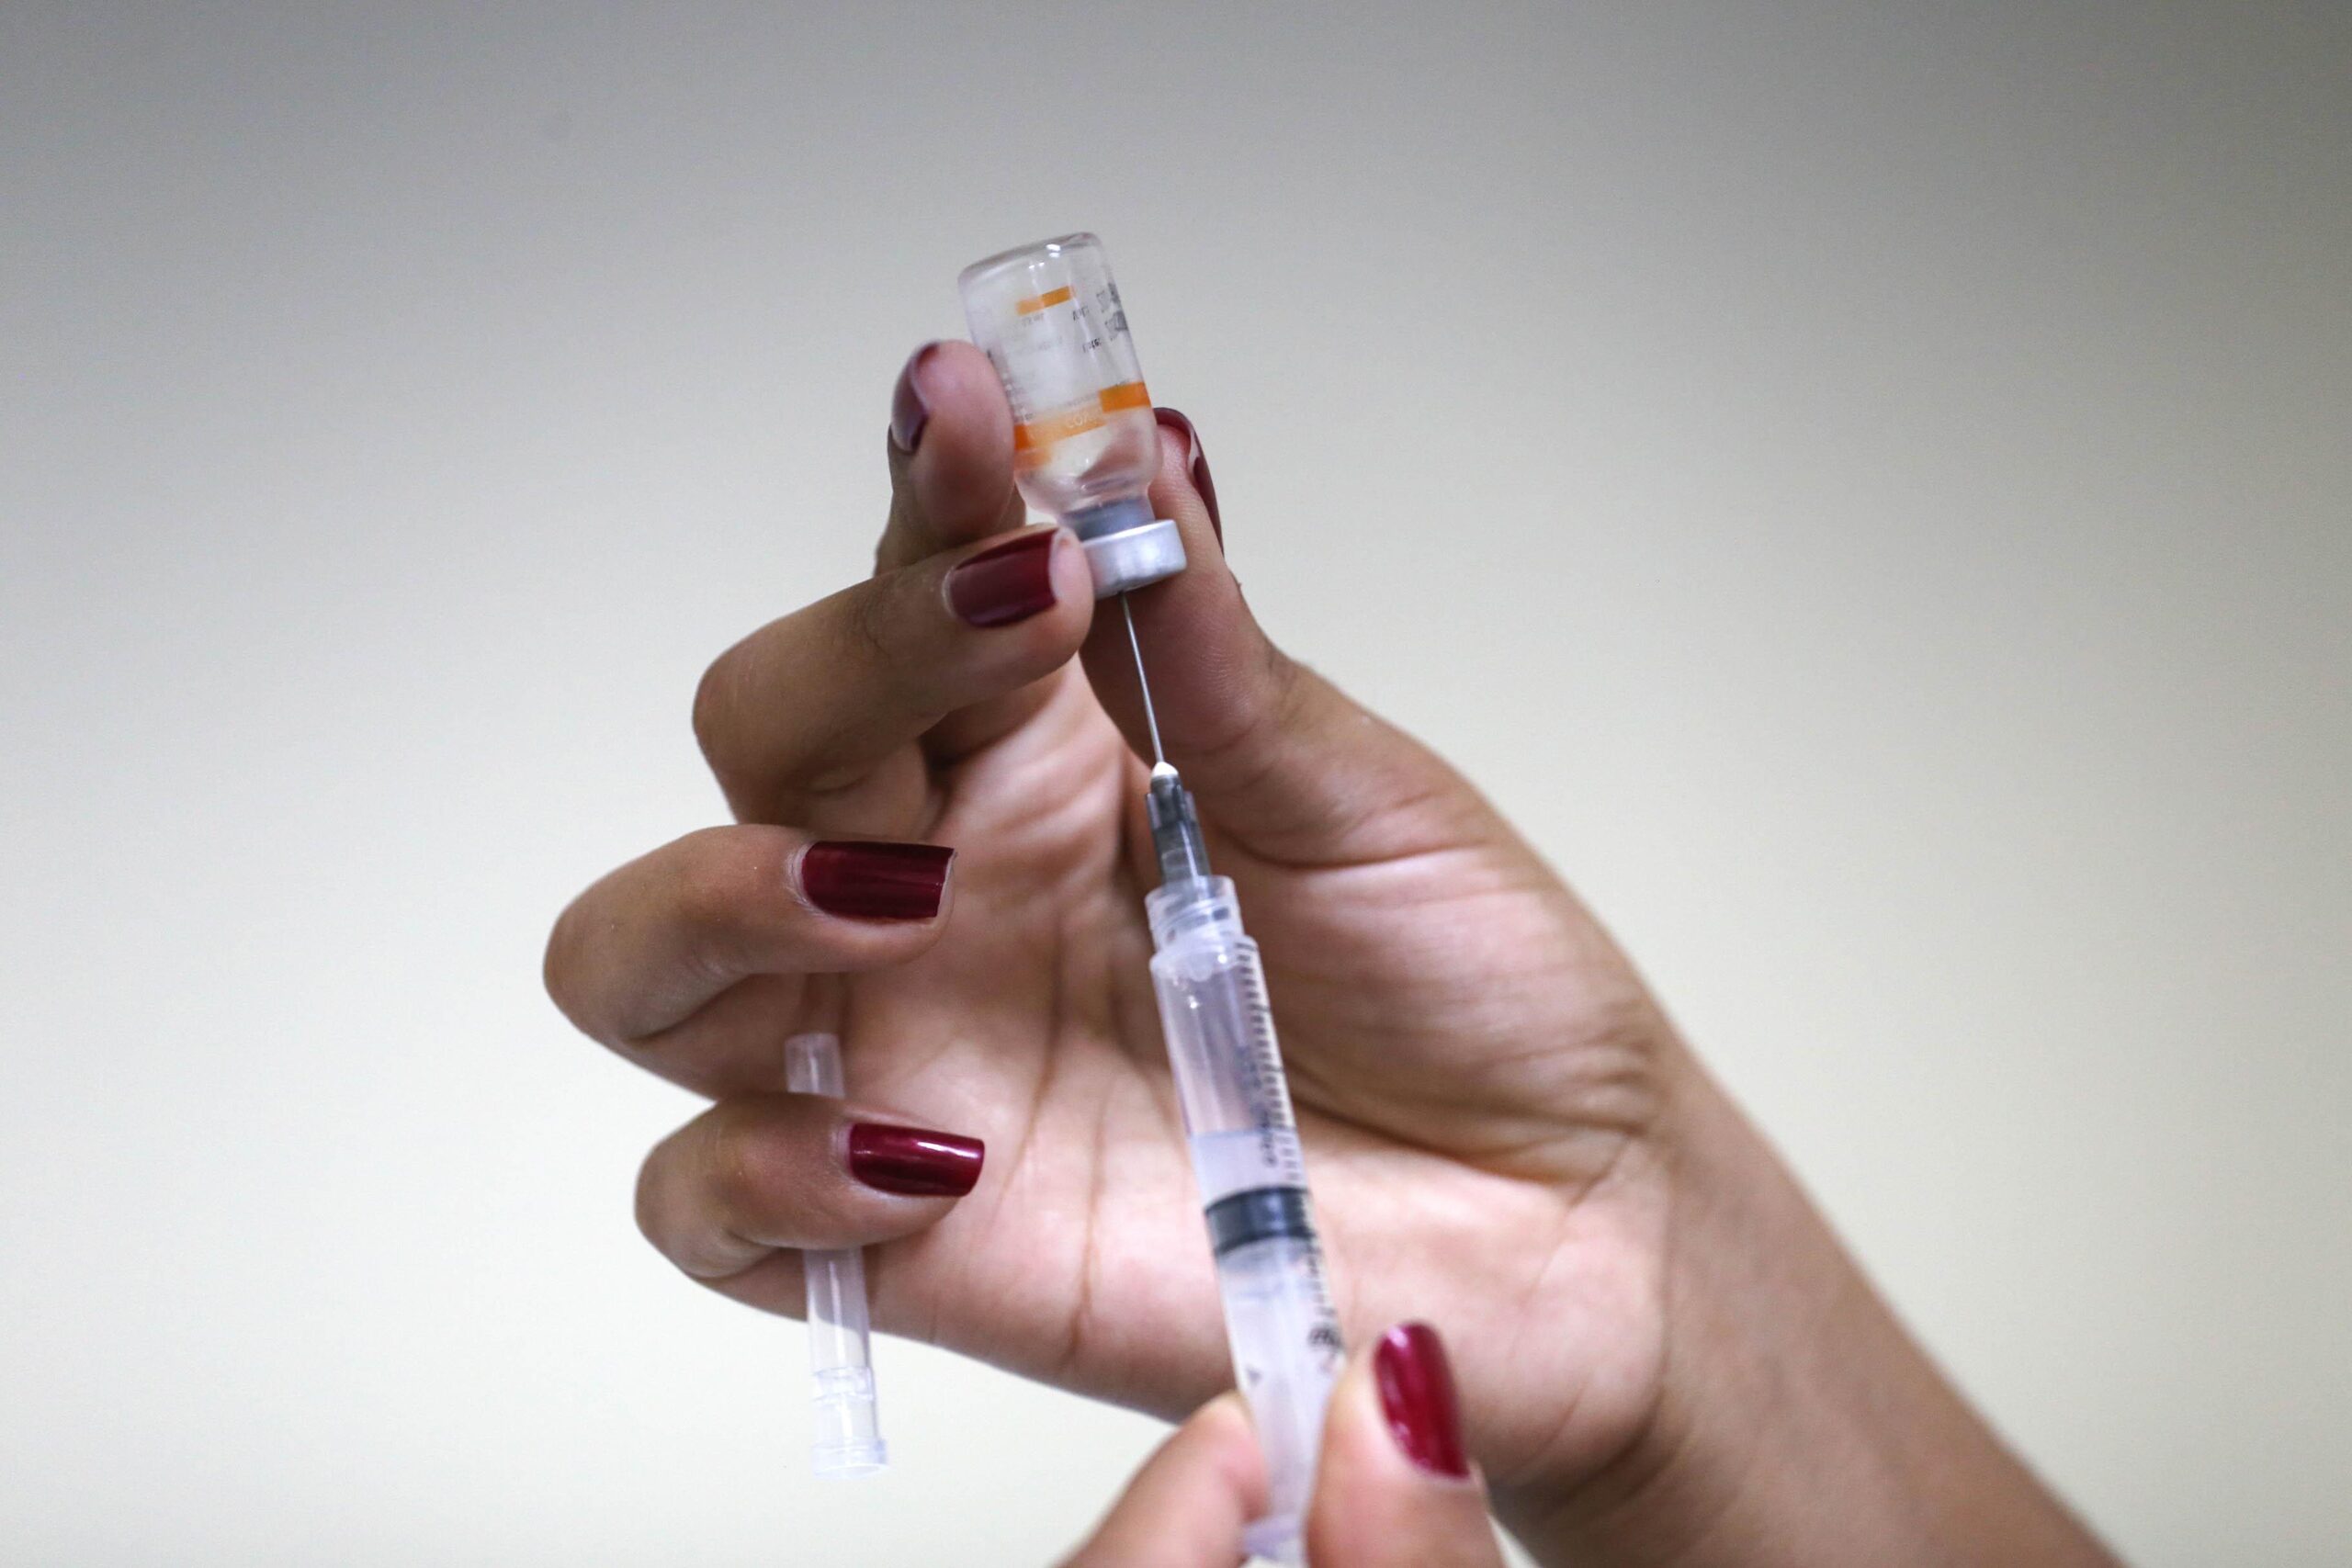 Medidas contra Covid-19 devem seguir mesmo após a vacina